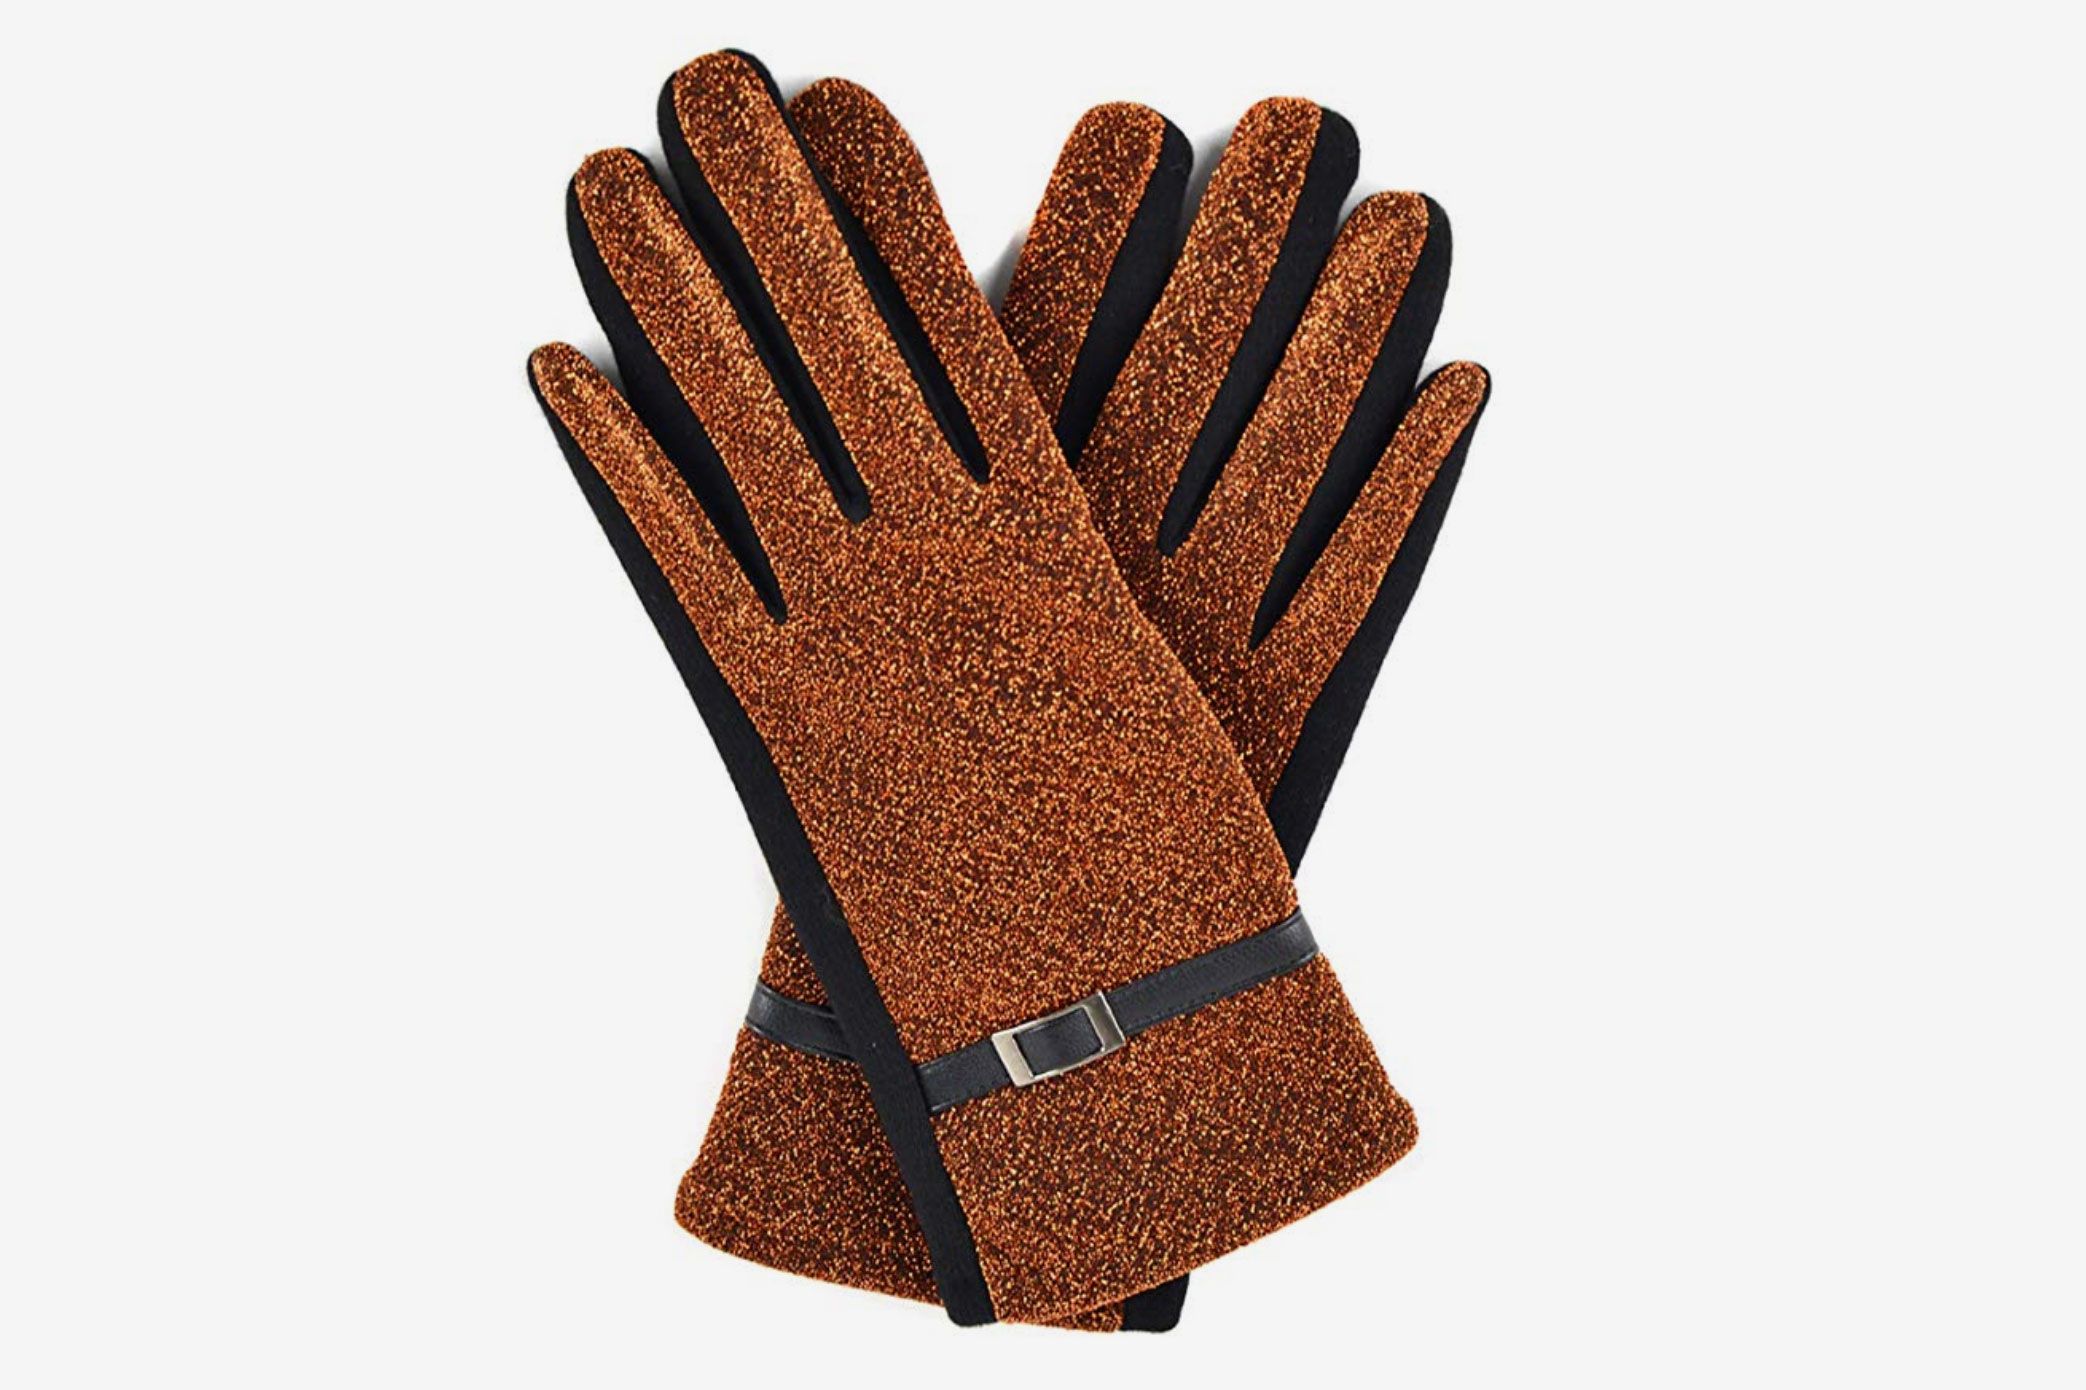 VAQM Winter Gloves for Women Touch Screen Gloves Warm Windproof Gloves Fleece Lining Gloves Outdoor Sports Gloves